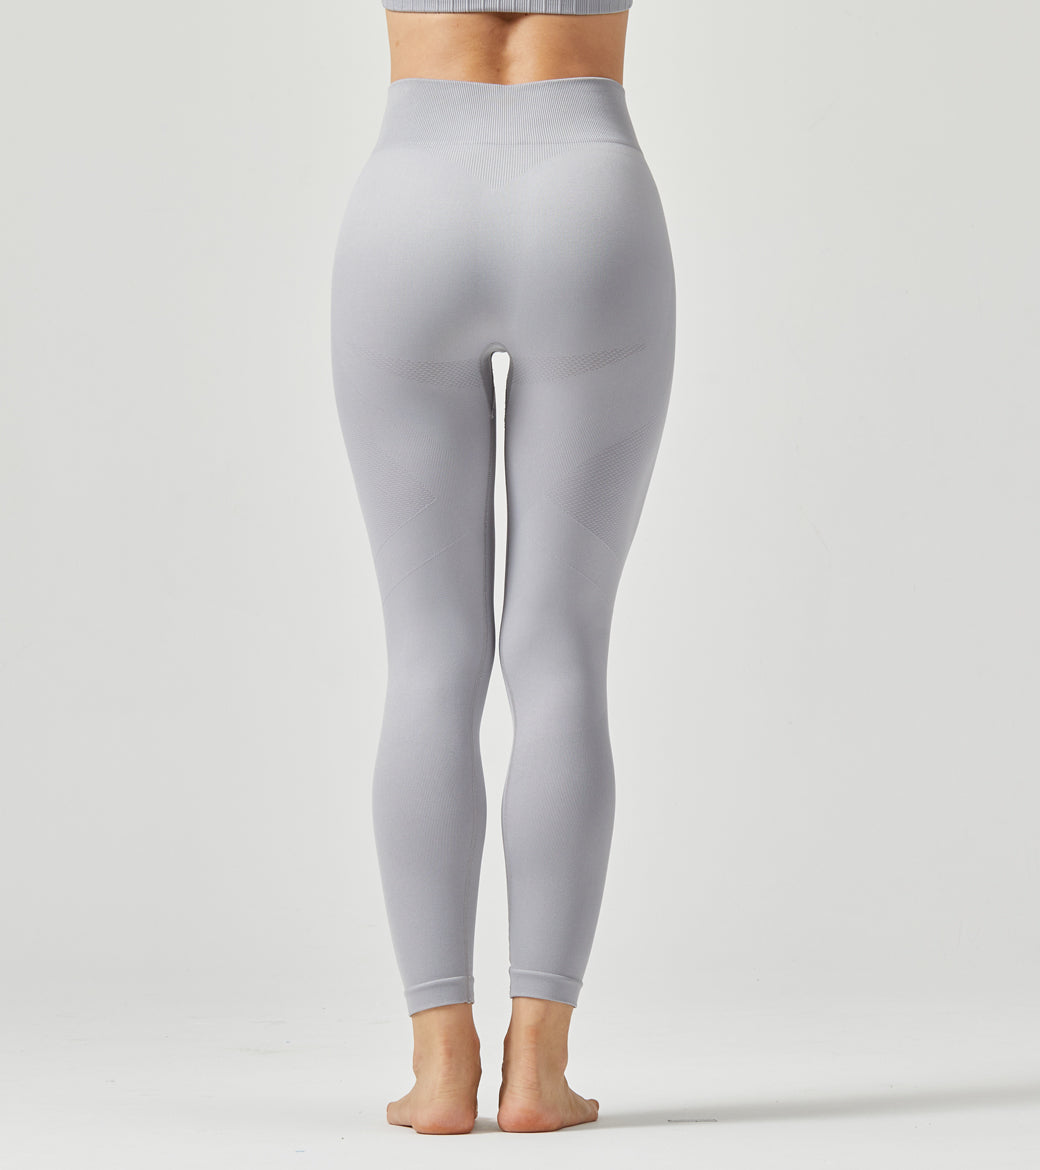 LOVESOFT Grey Seamless Leggings for Women Yoga Workout Tight Pants